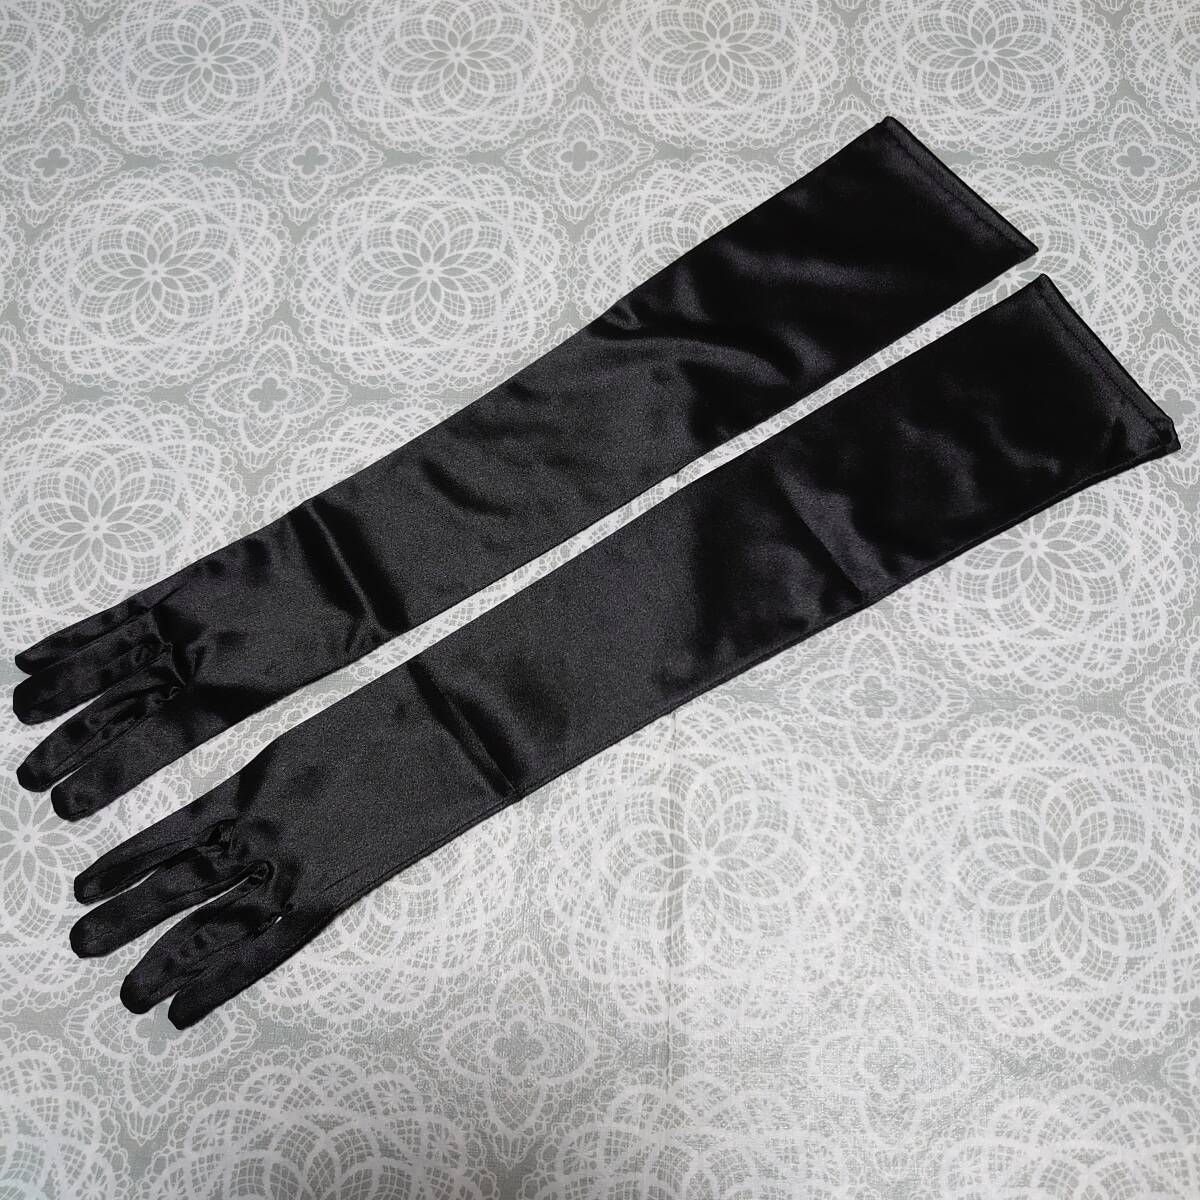  gloves * long glove * approximately 54cm* black * lustre * wedding * formal /1042